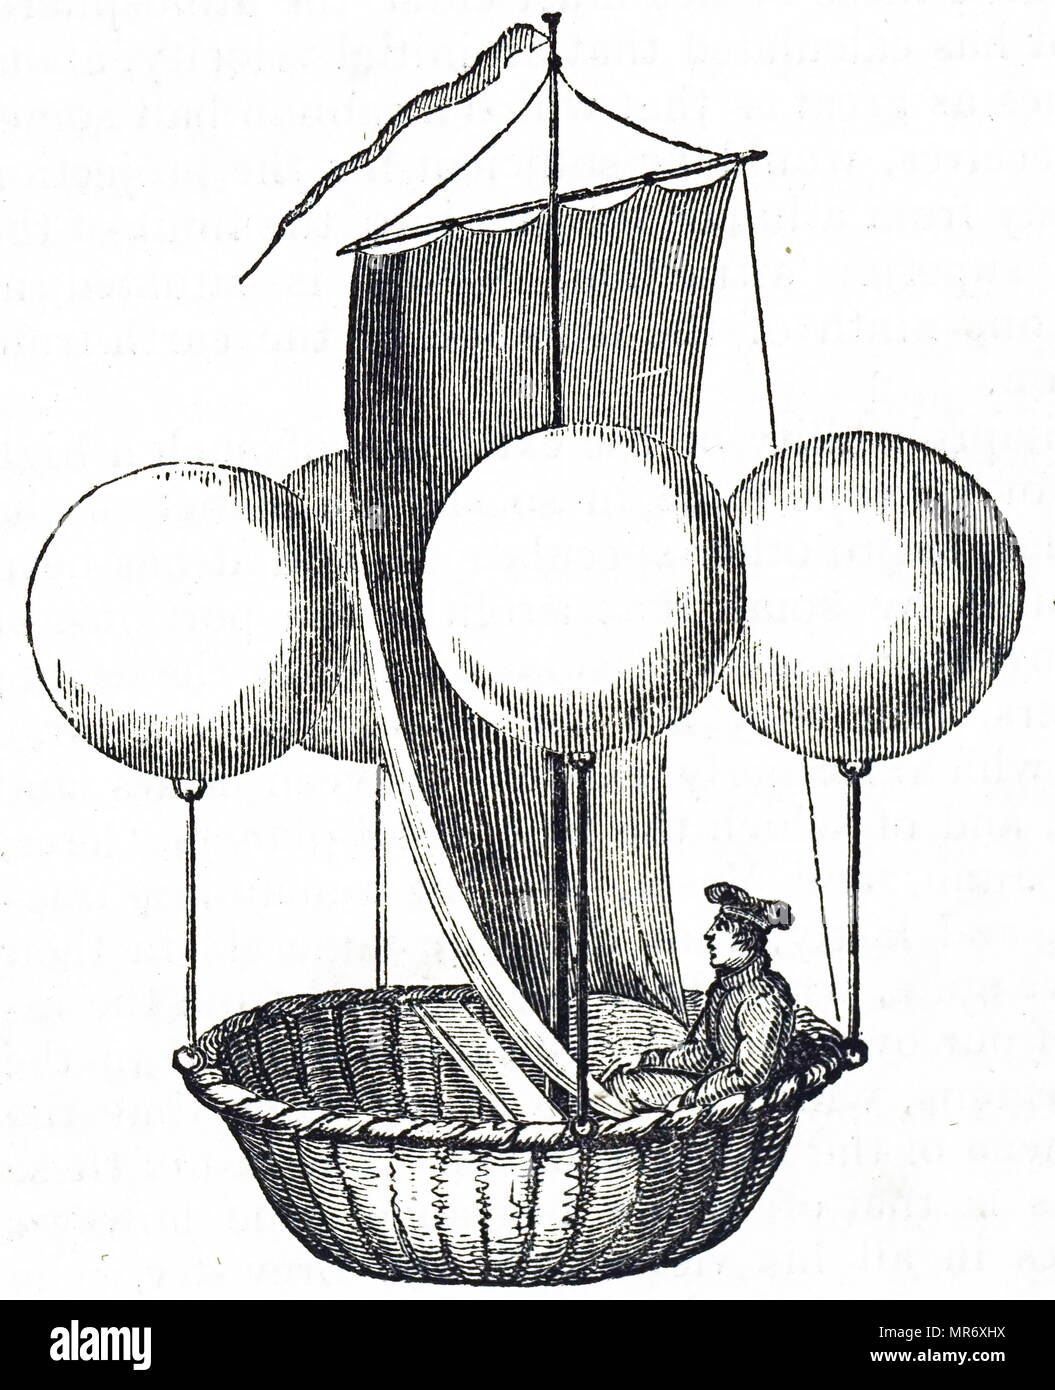 Engraving depicting Francesco Lana de Terzi's flying boat concept. Francesco Lana de Terzi (1631-1687) an Italian Jesuit priest, mathematician, naturalist and aeronautics pioneer. Dated 19th century Stock Photo